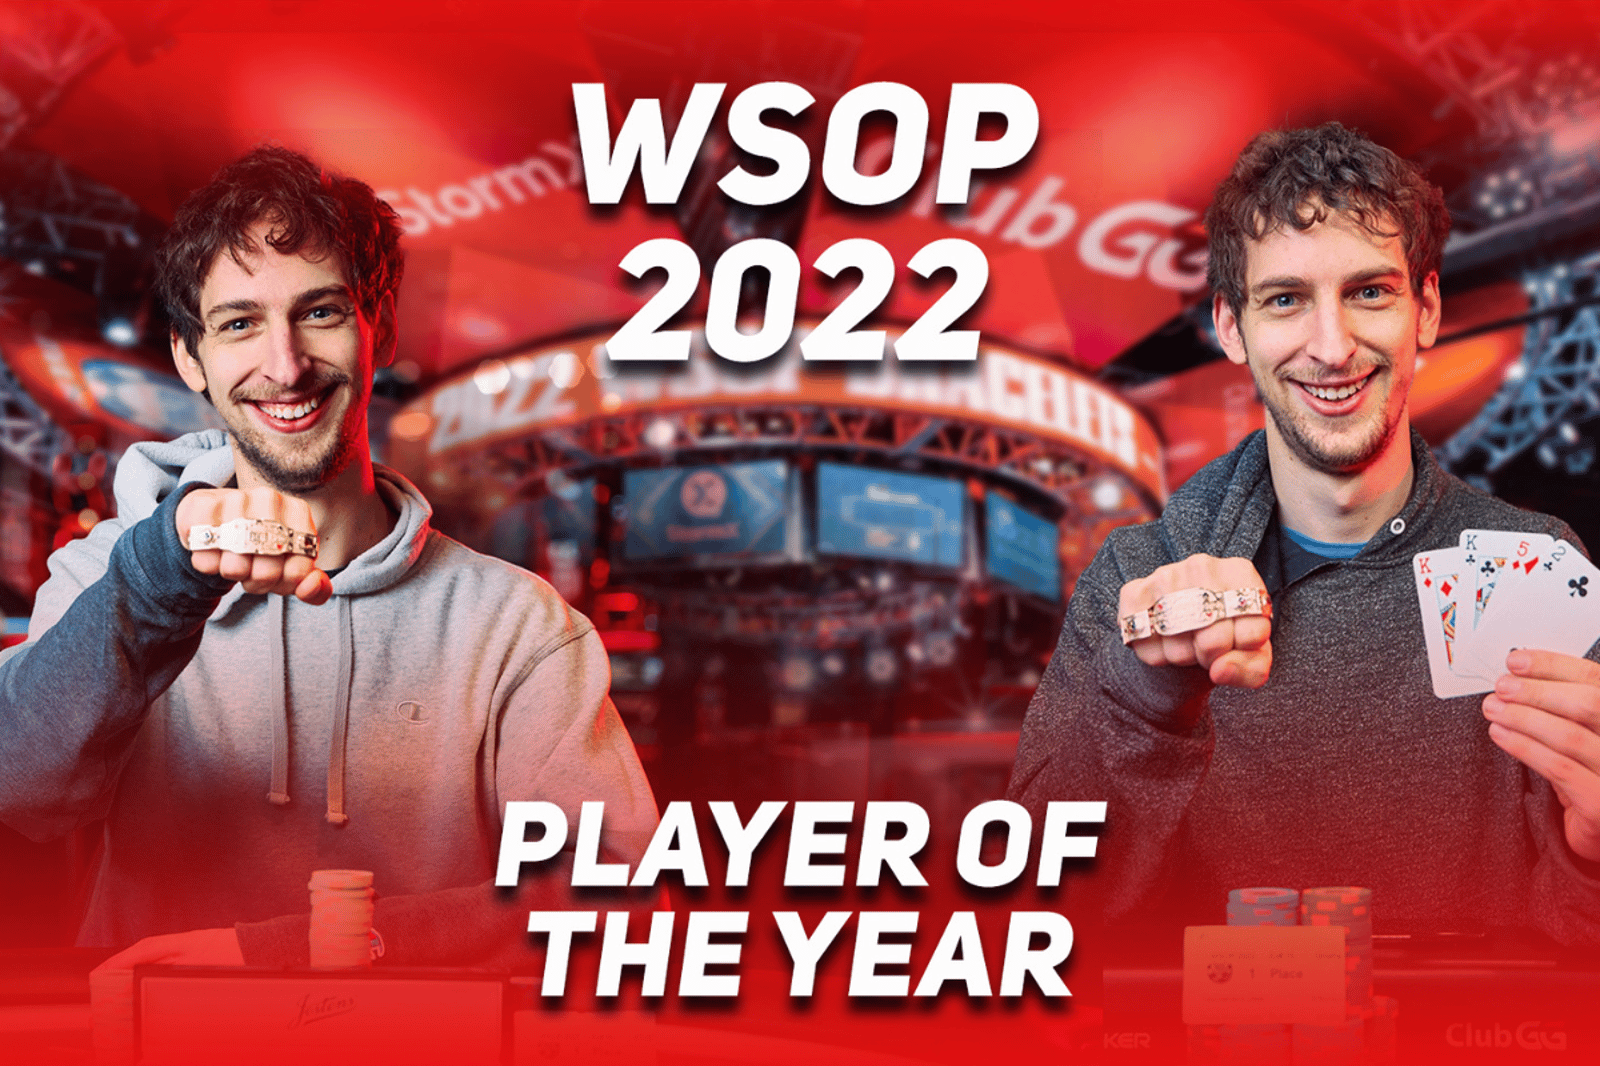 Dan Zack Wins 2022 WSOP Player of the Year